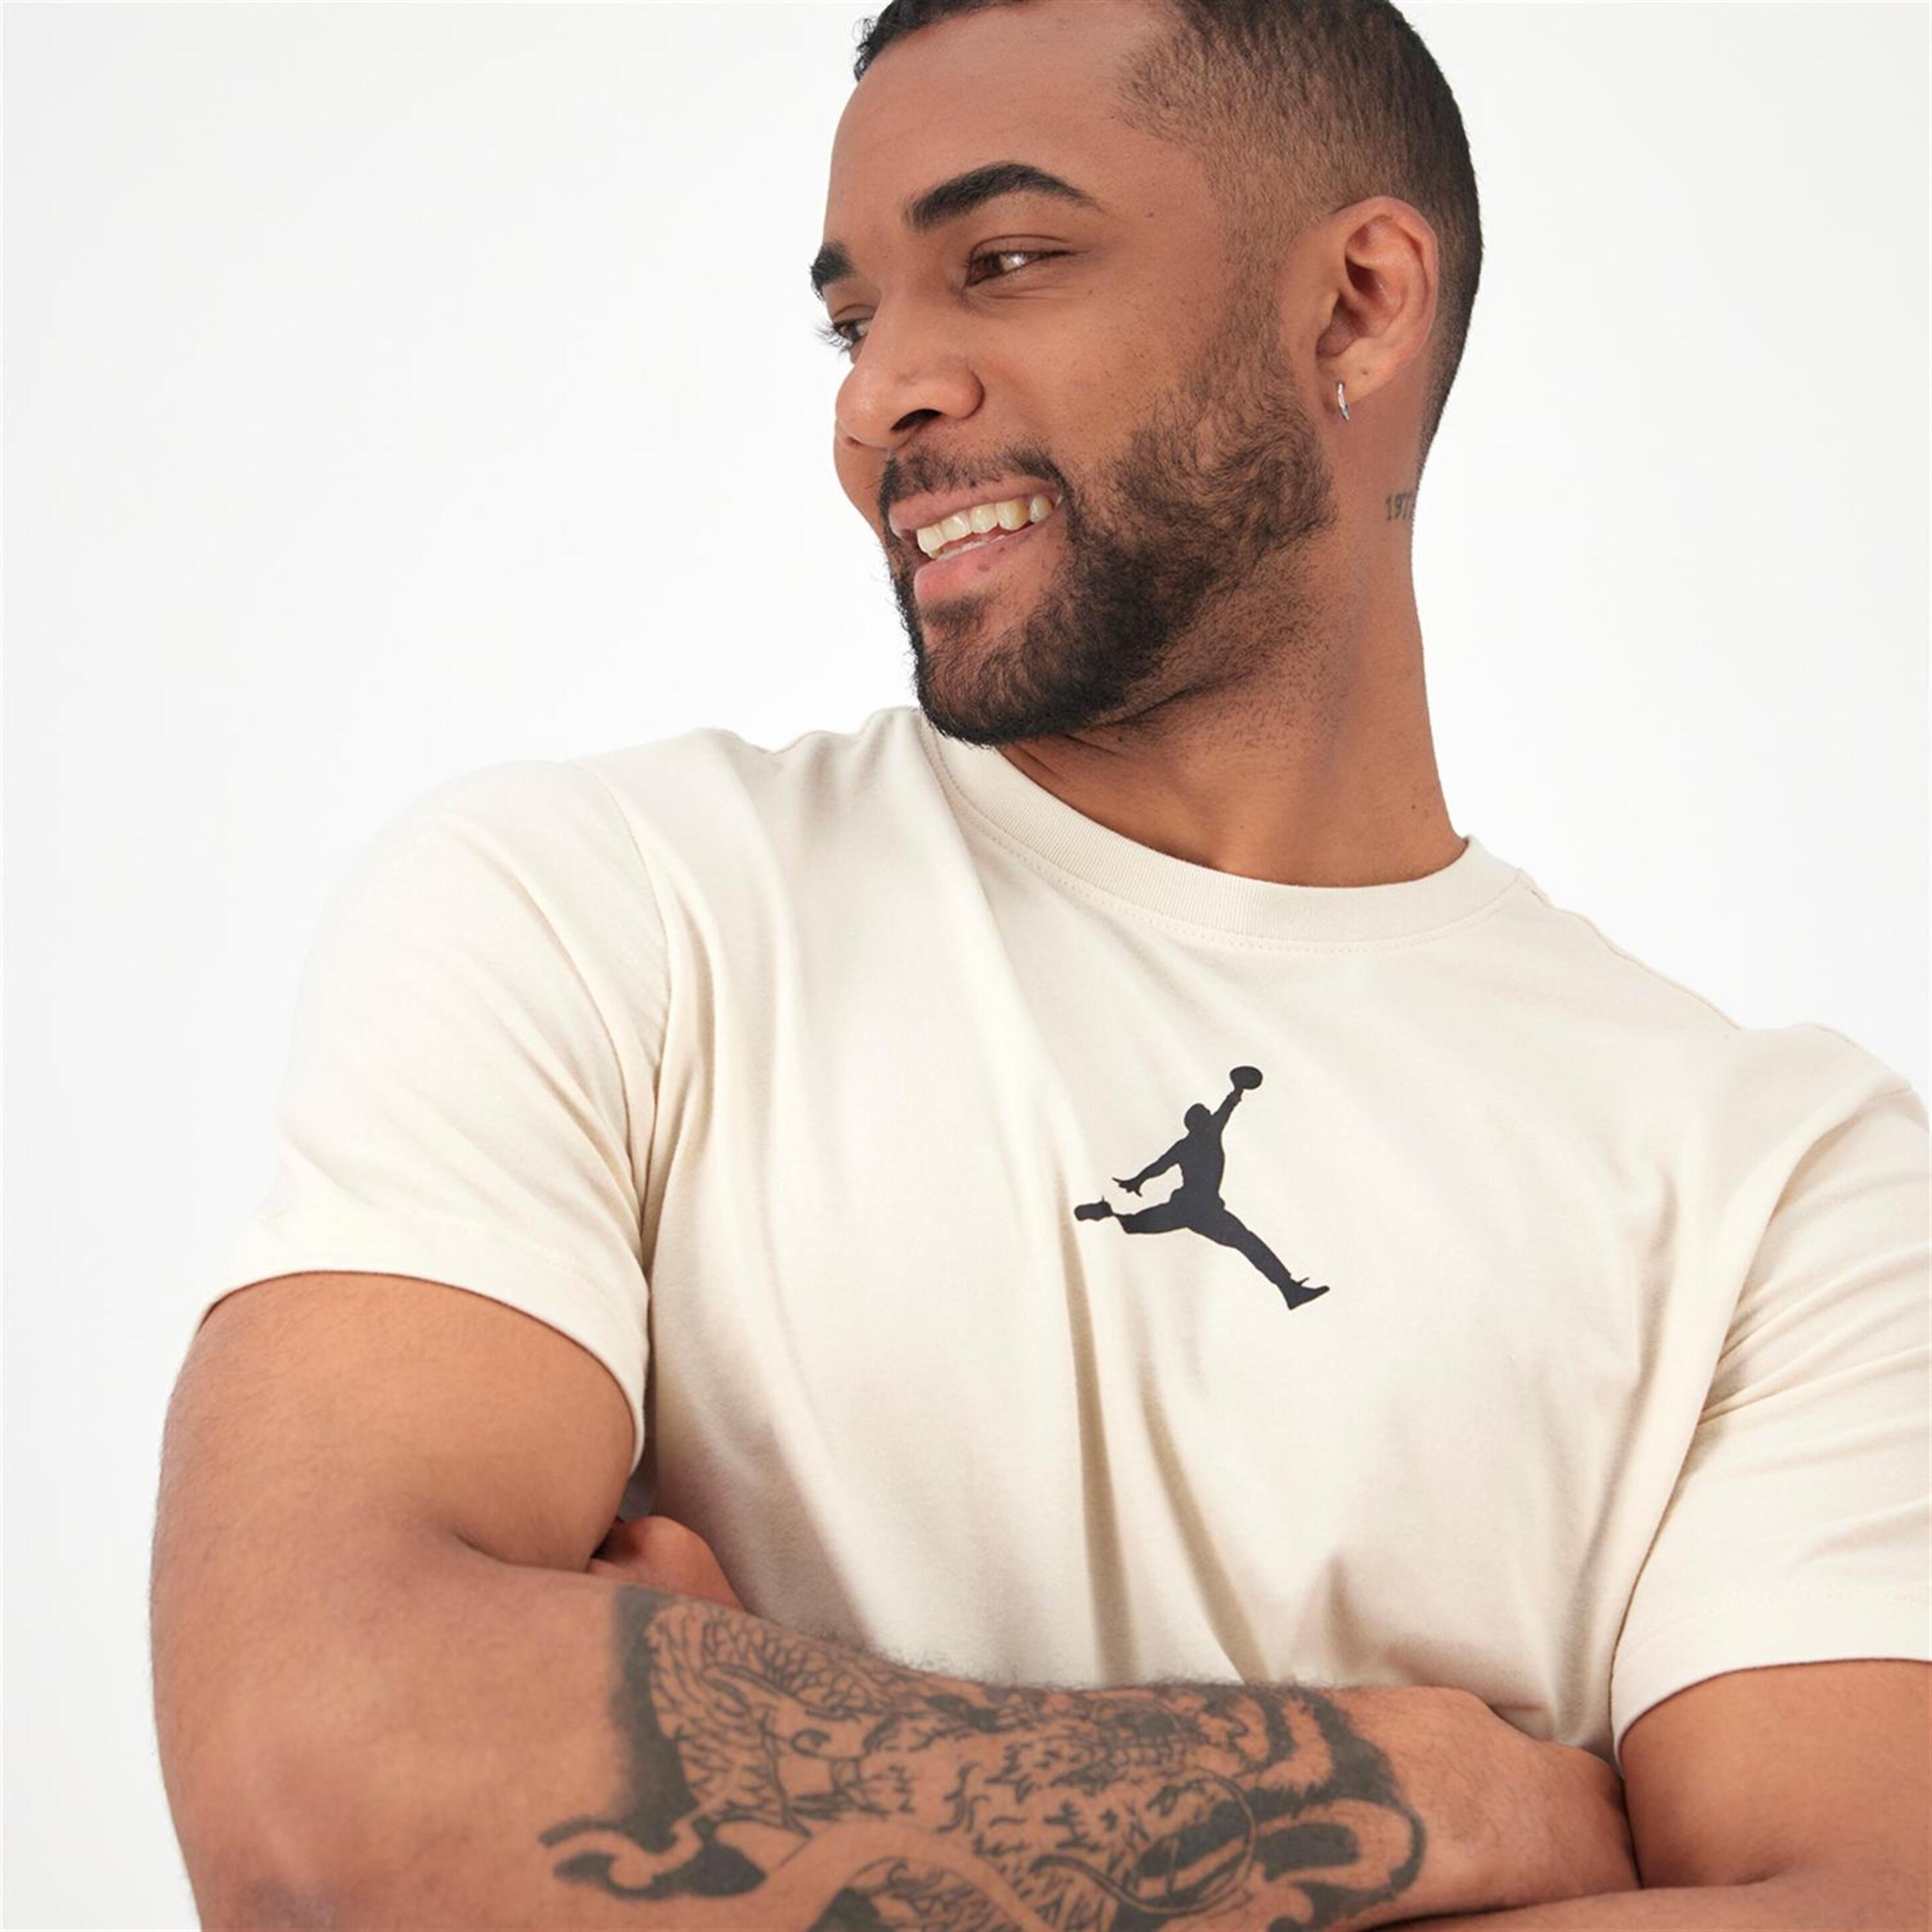 Camiseta Jordan - Arena - Camiseta Hombre